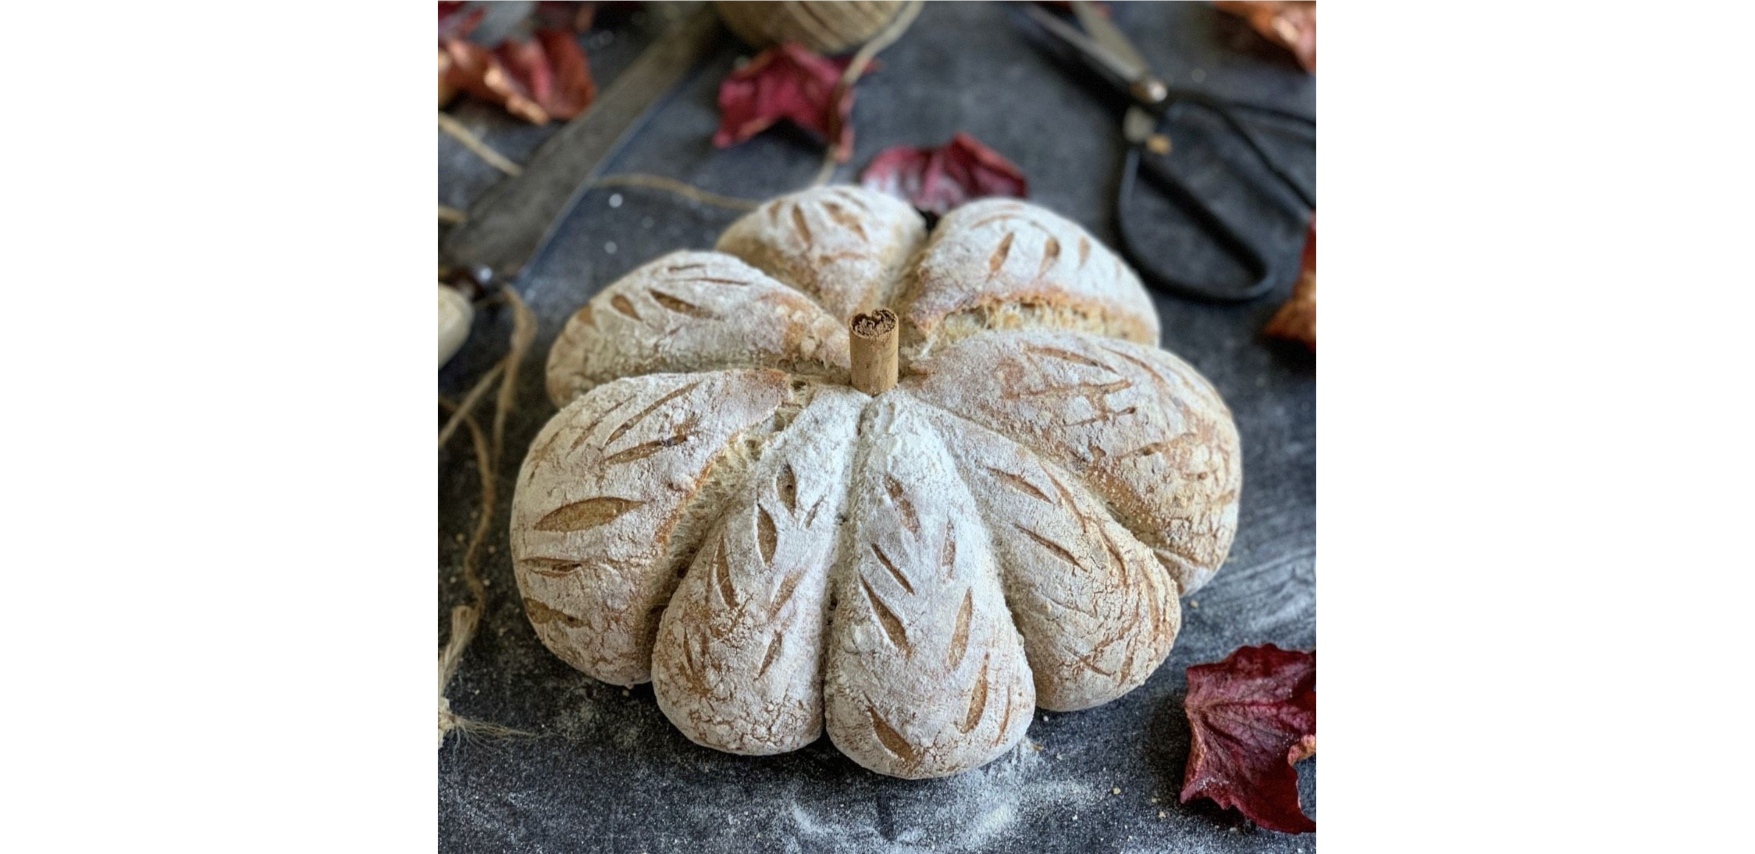 https://www.gfw.co.uk/media/3577/n2020_12-recipes-burnsboothkaren-pumpkinbread-header.jpg